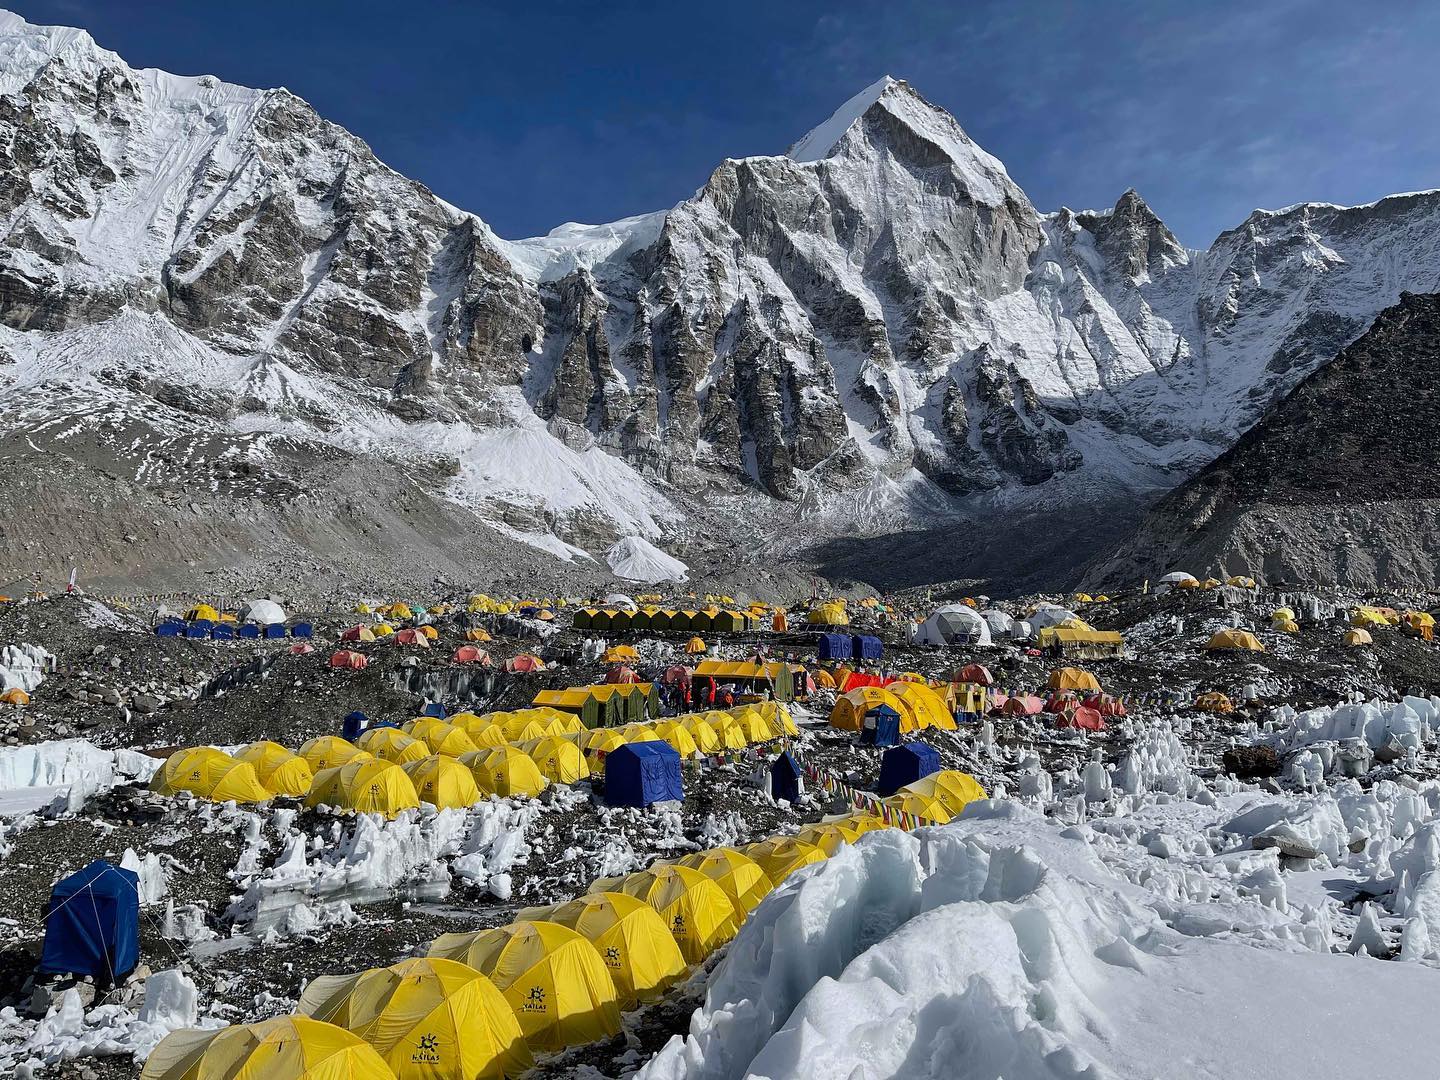 Sleep at Everest Base Camp